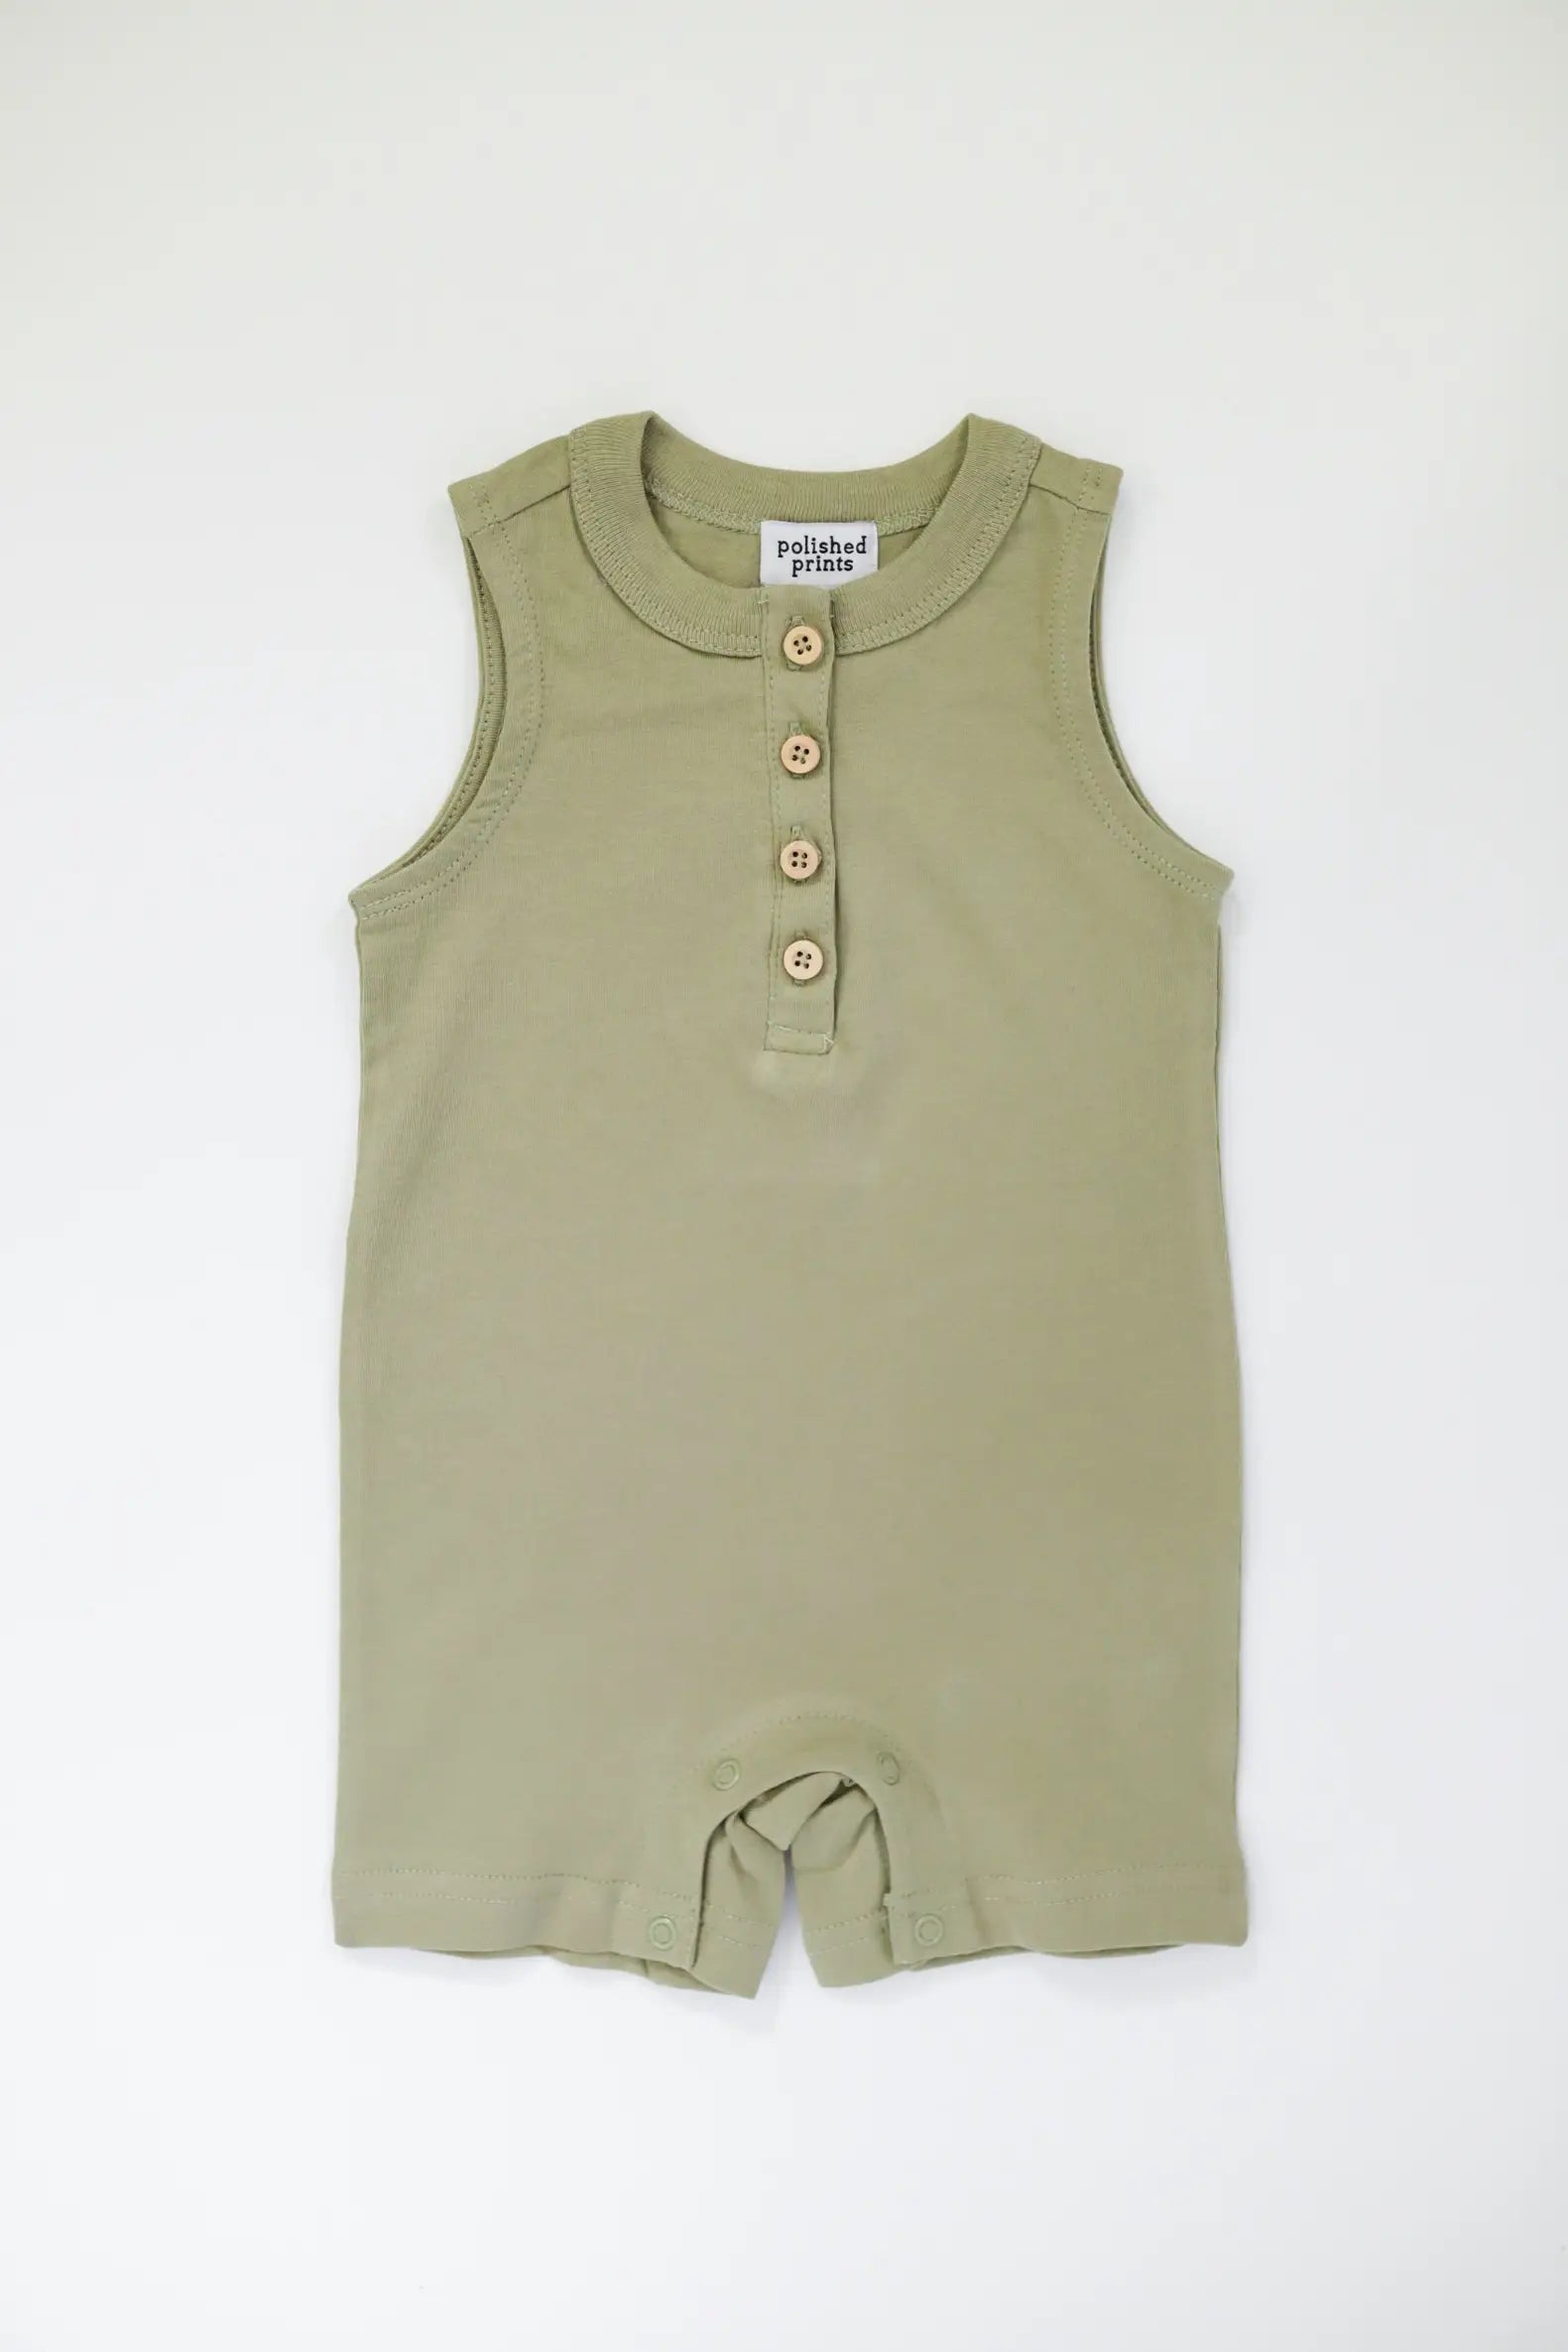 green tea shortie baby romper onesie | polished prints